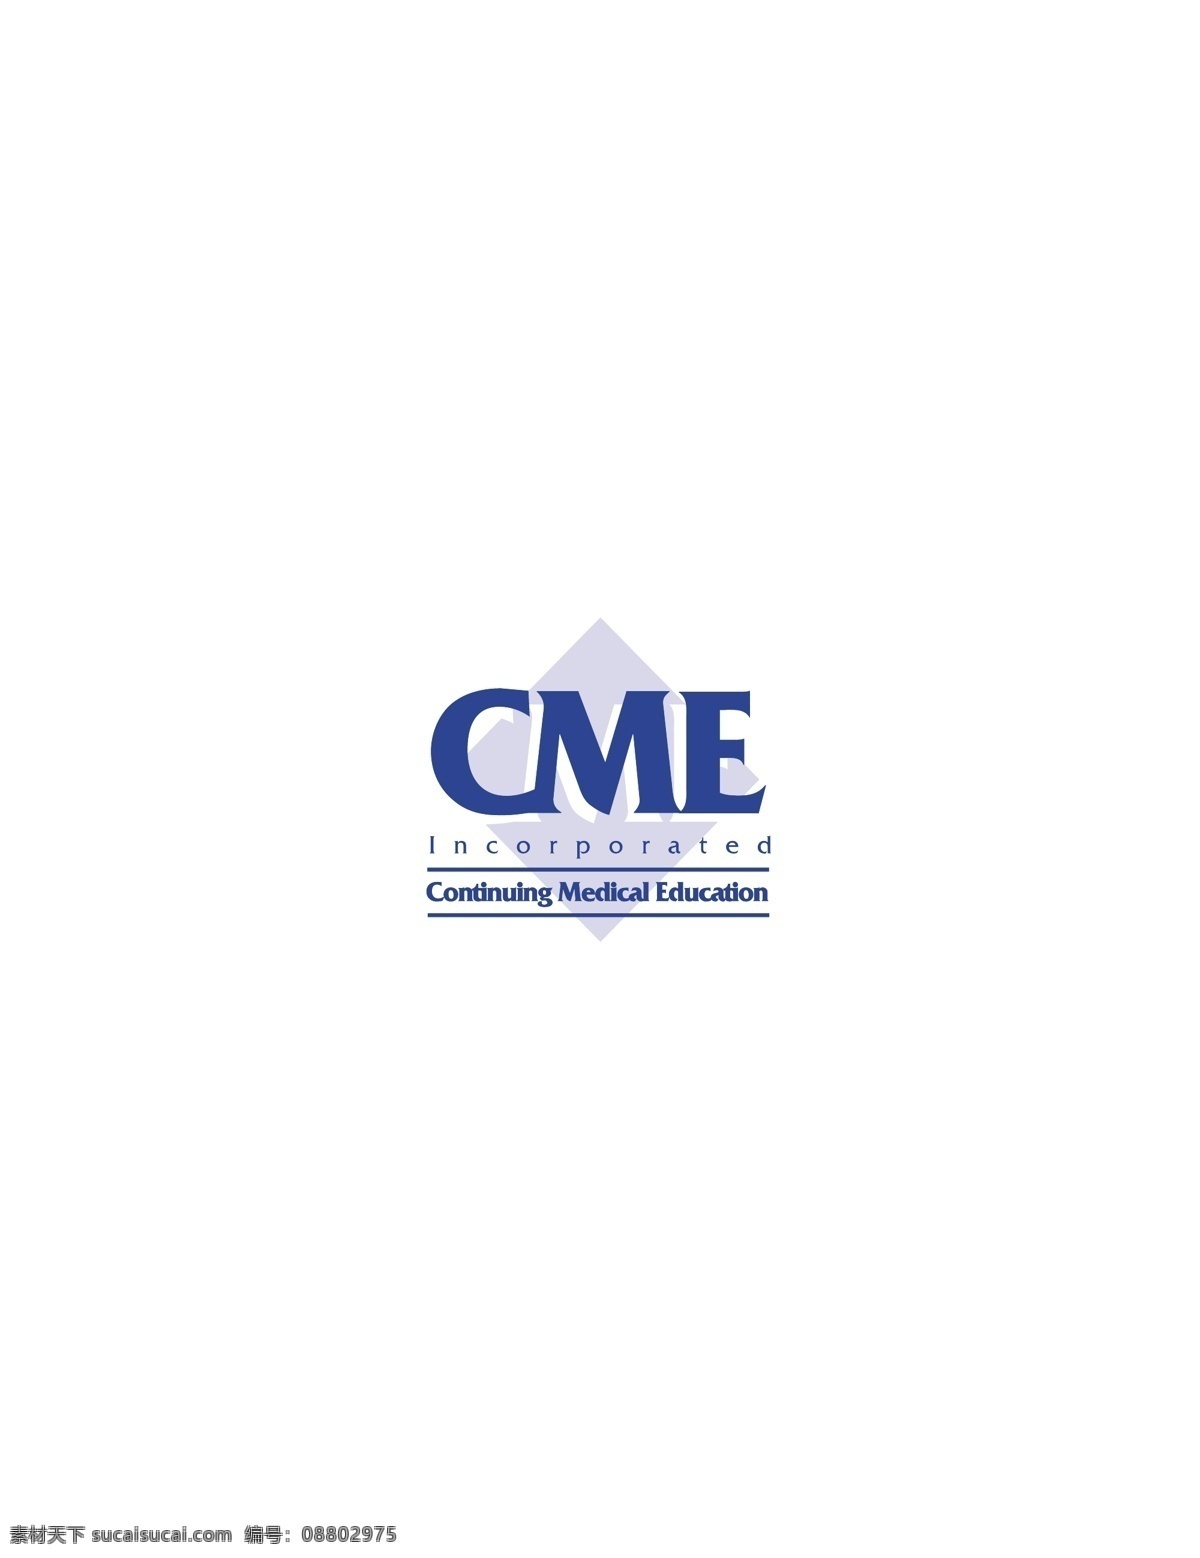 cme1 logo大全 logo 设计欣赏 商业矢量 矢量下载 学校 标志设计 欣赏 网页矢量 矢量图 其他矢量图